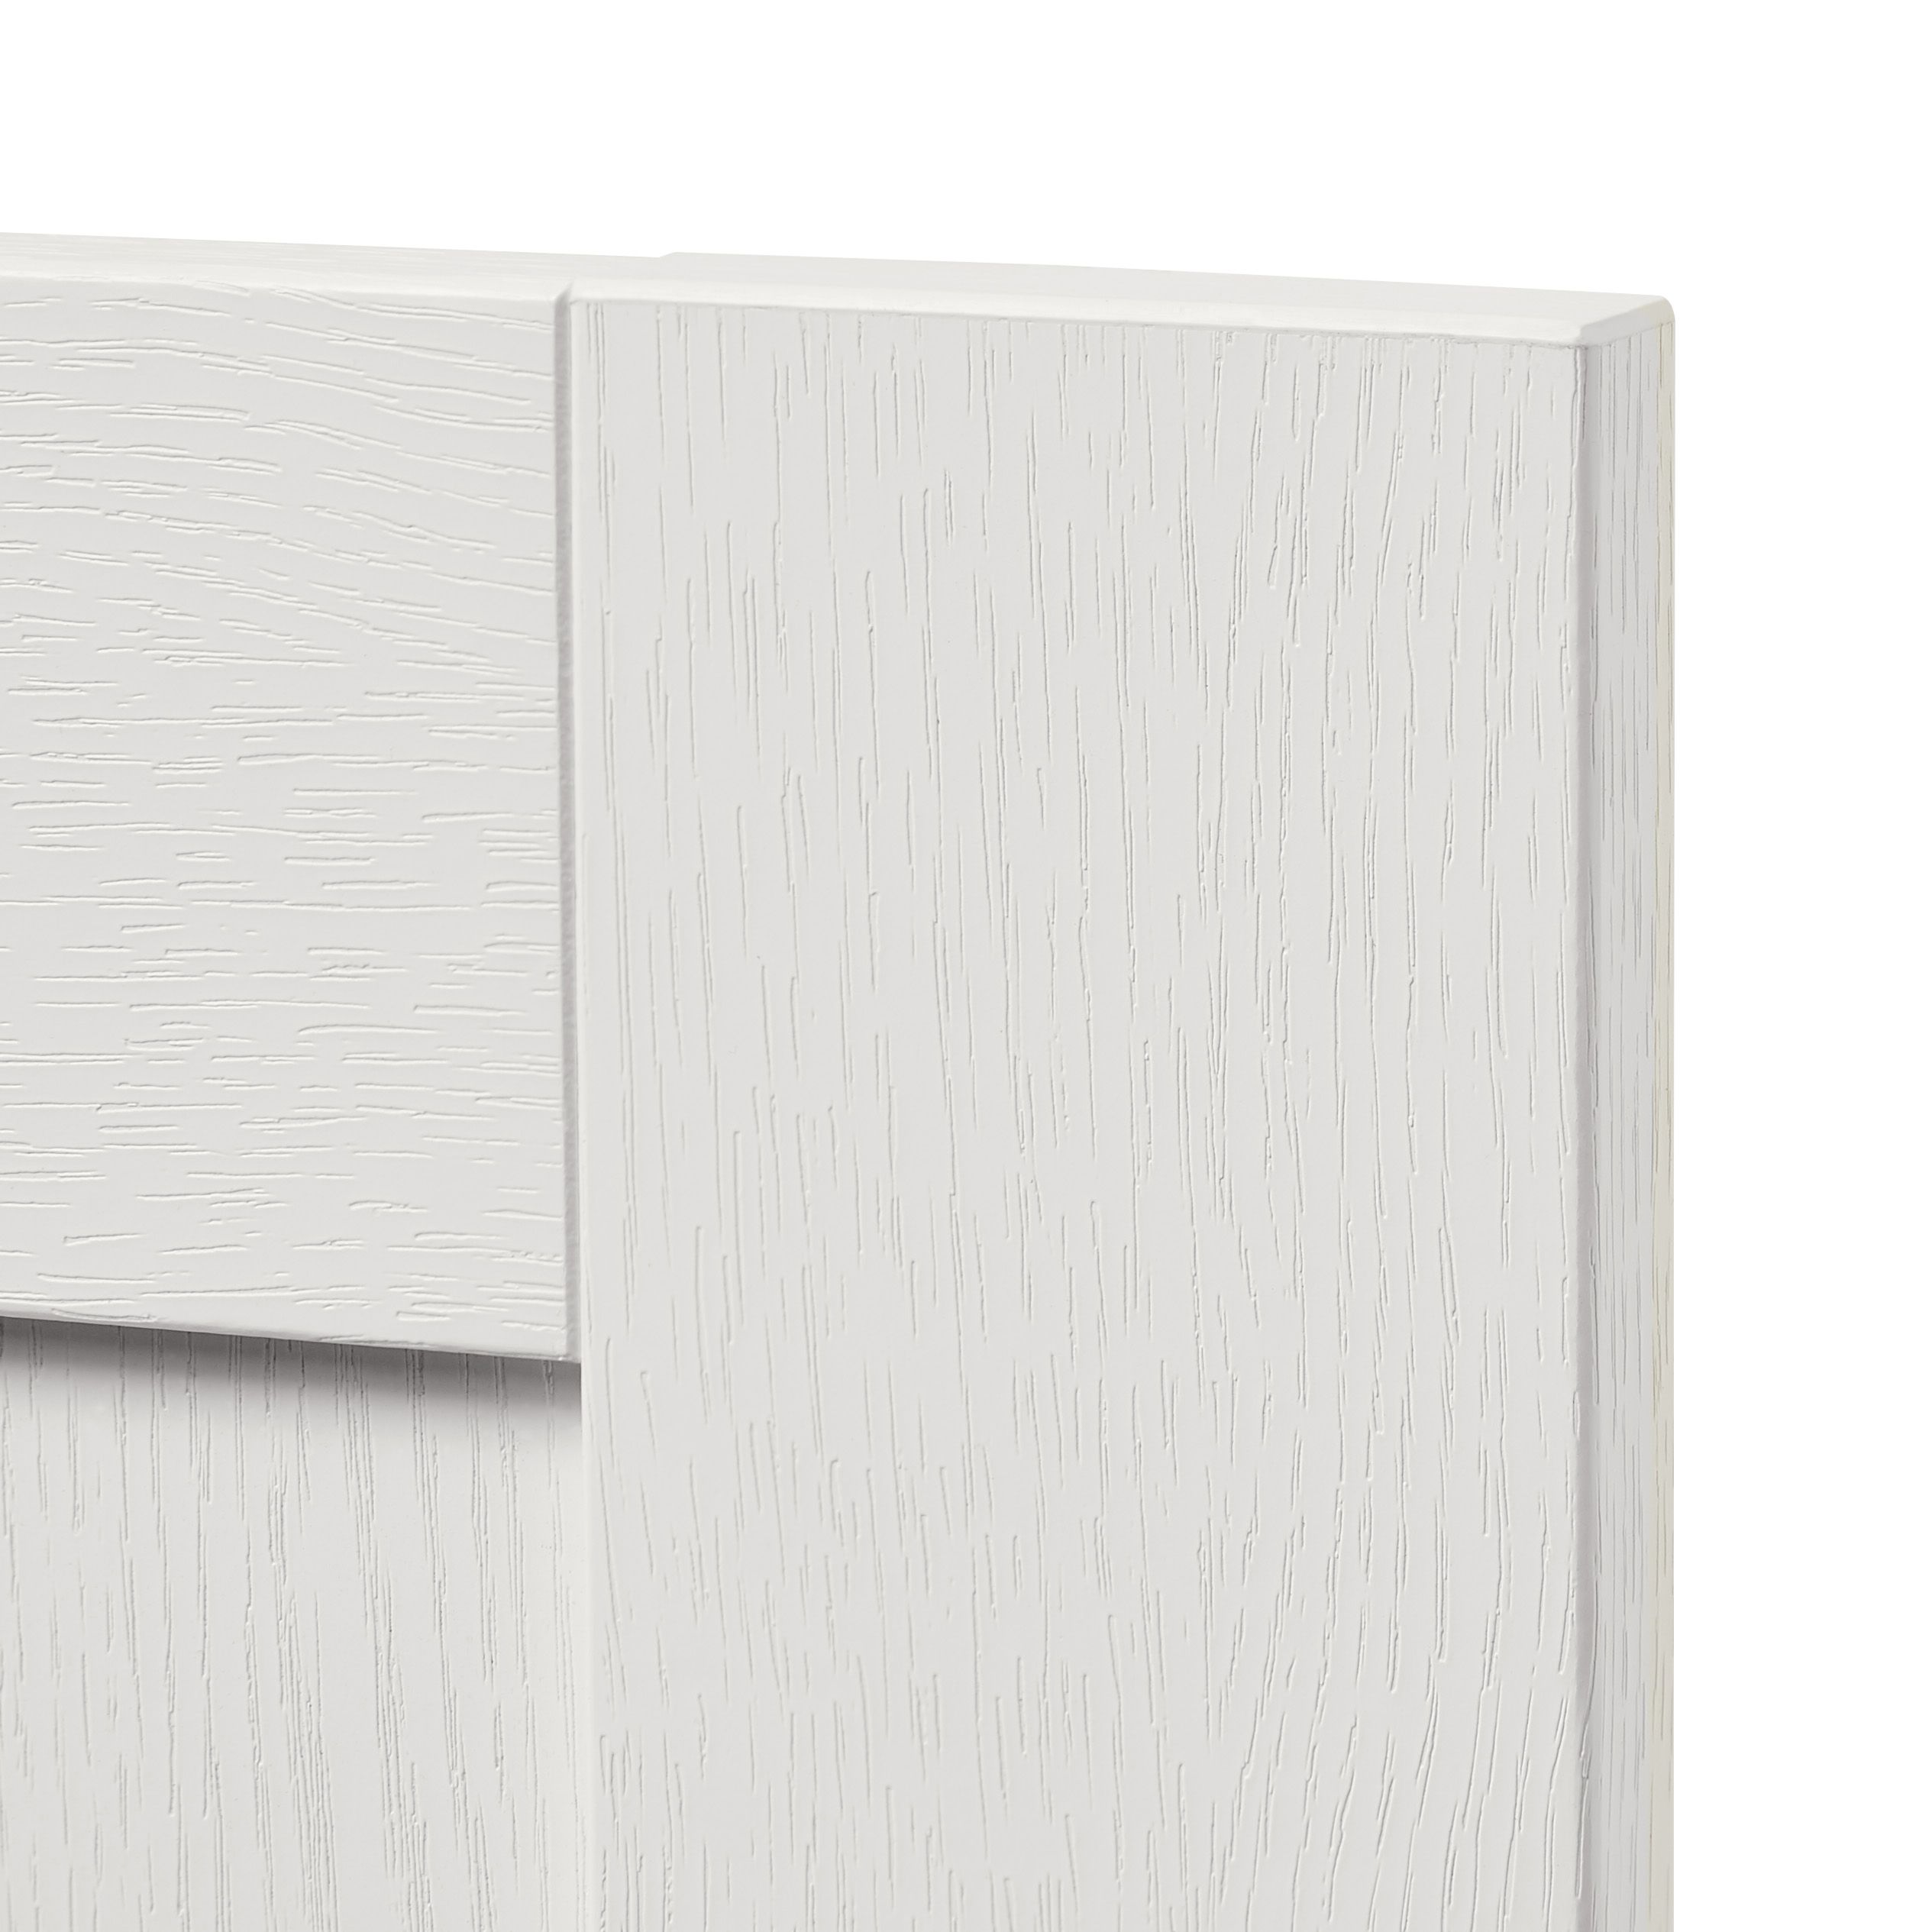 GoodHome Alpinia Matt ivory painted wood effect shaker Appliance Cabinet door (W)600mm (H)687mm (T)18mm